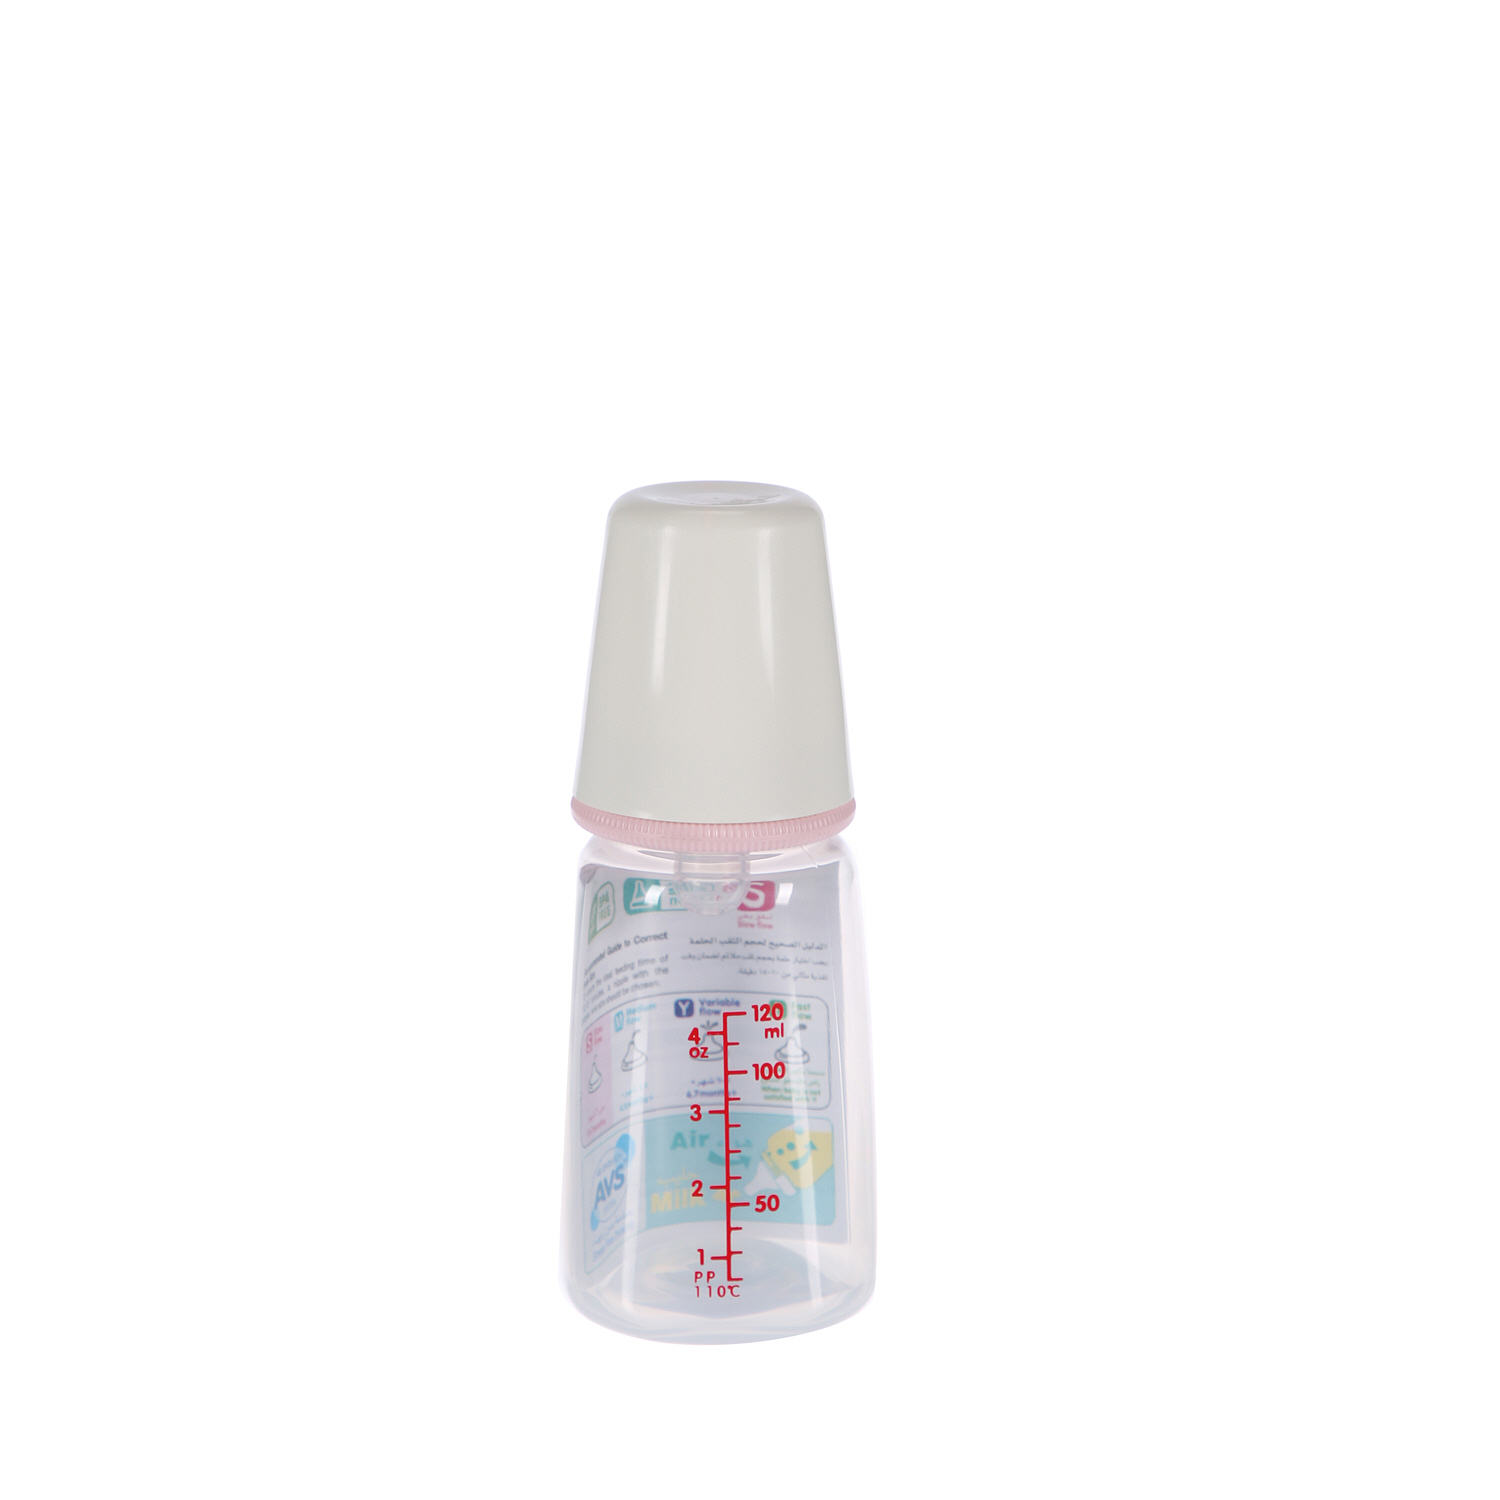 Pigeon KPP Standard Neck Nursing Bottle 120 ml